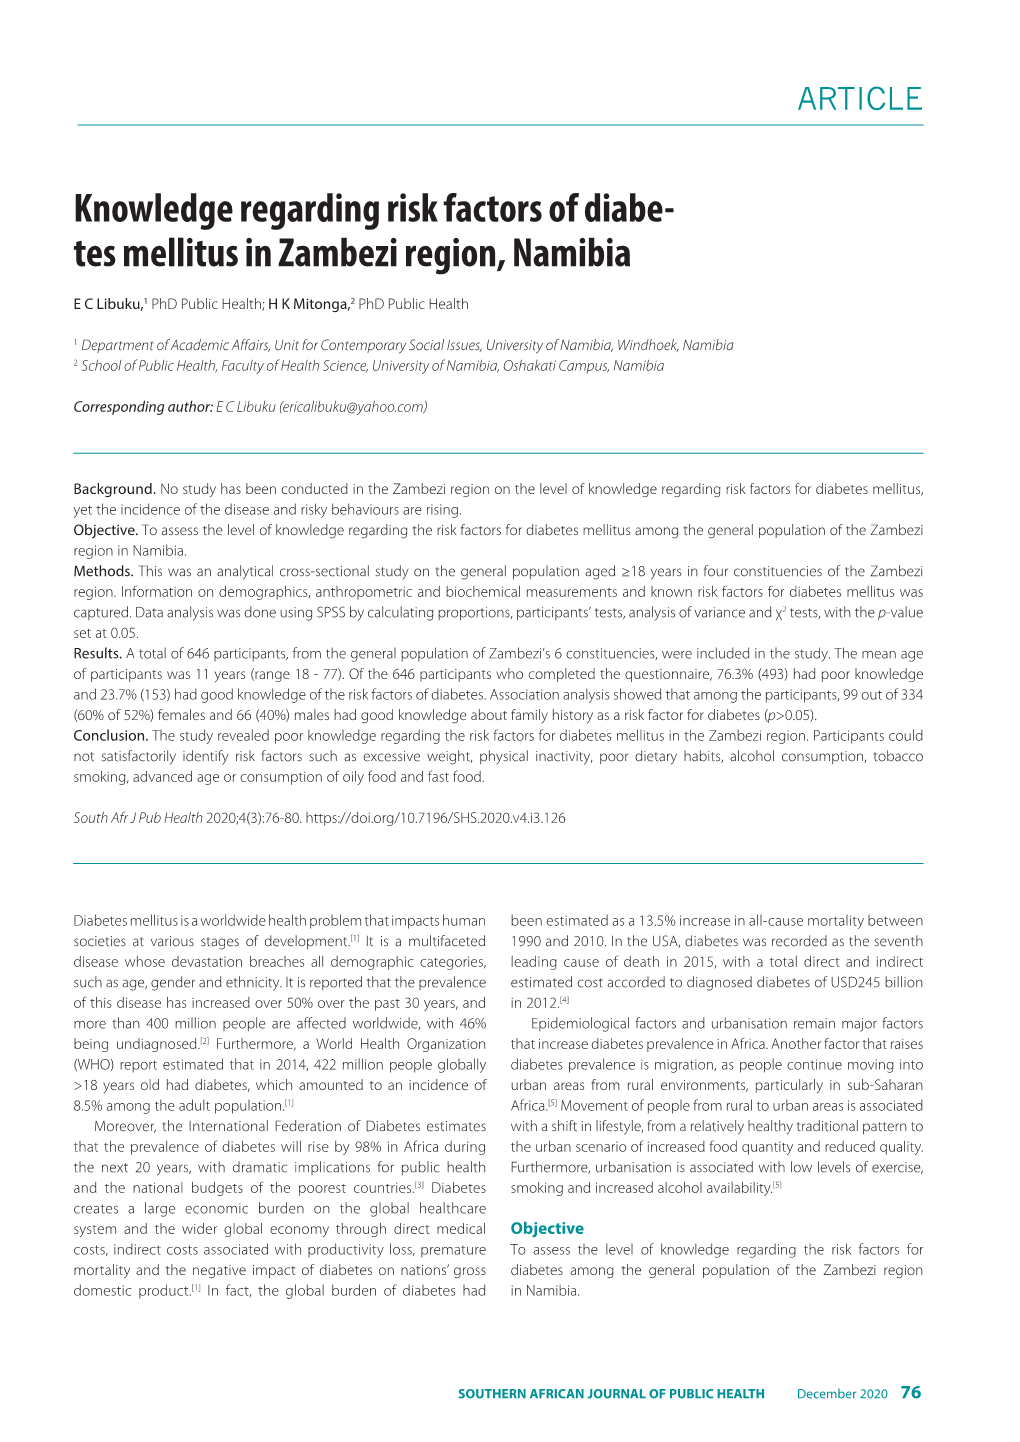 Knowledge Regarding Risk Factors of Diabe- Tes Mellitus in Zambezi Region, Namibia